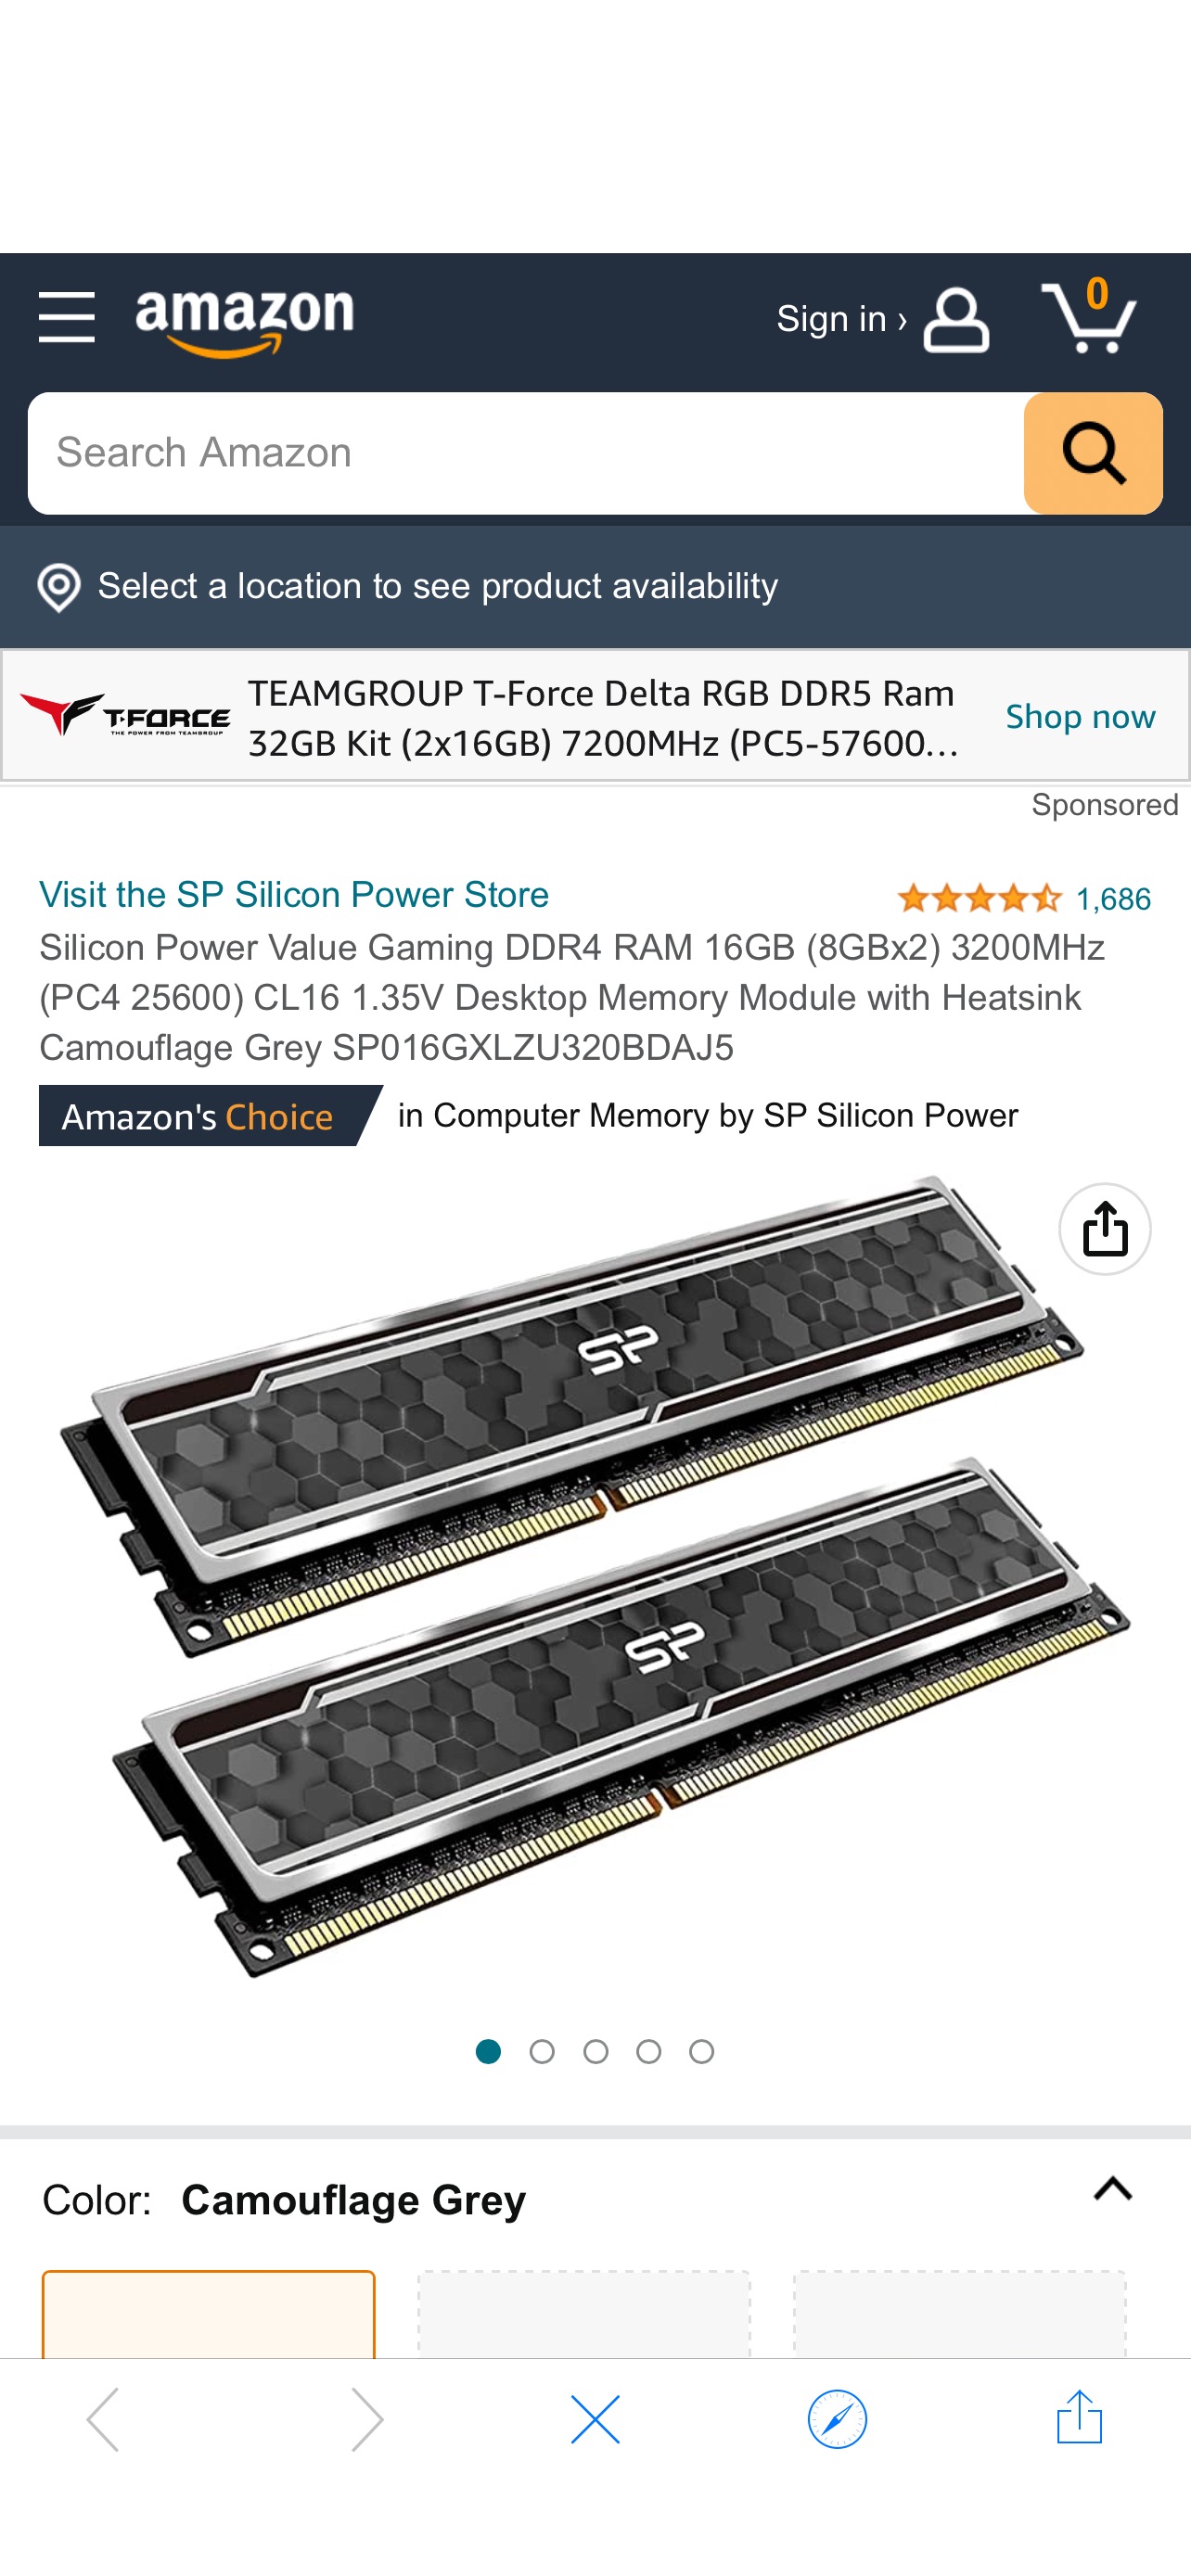 Silicon Power Value Gaming DDR4 RAM 16GB 内存(8GBx2) 3200MHz (PC4 25600) CL16 1.35V Desktop Memory Module with Heatsink Camouflage Grey SP016GXLZU320BDAJ5 at Amazon.com